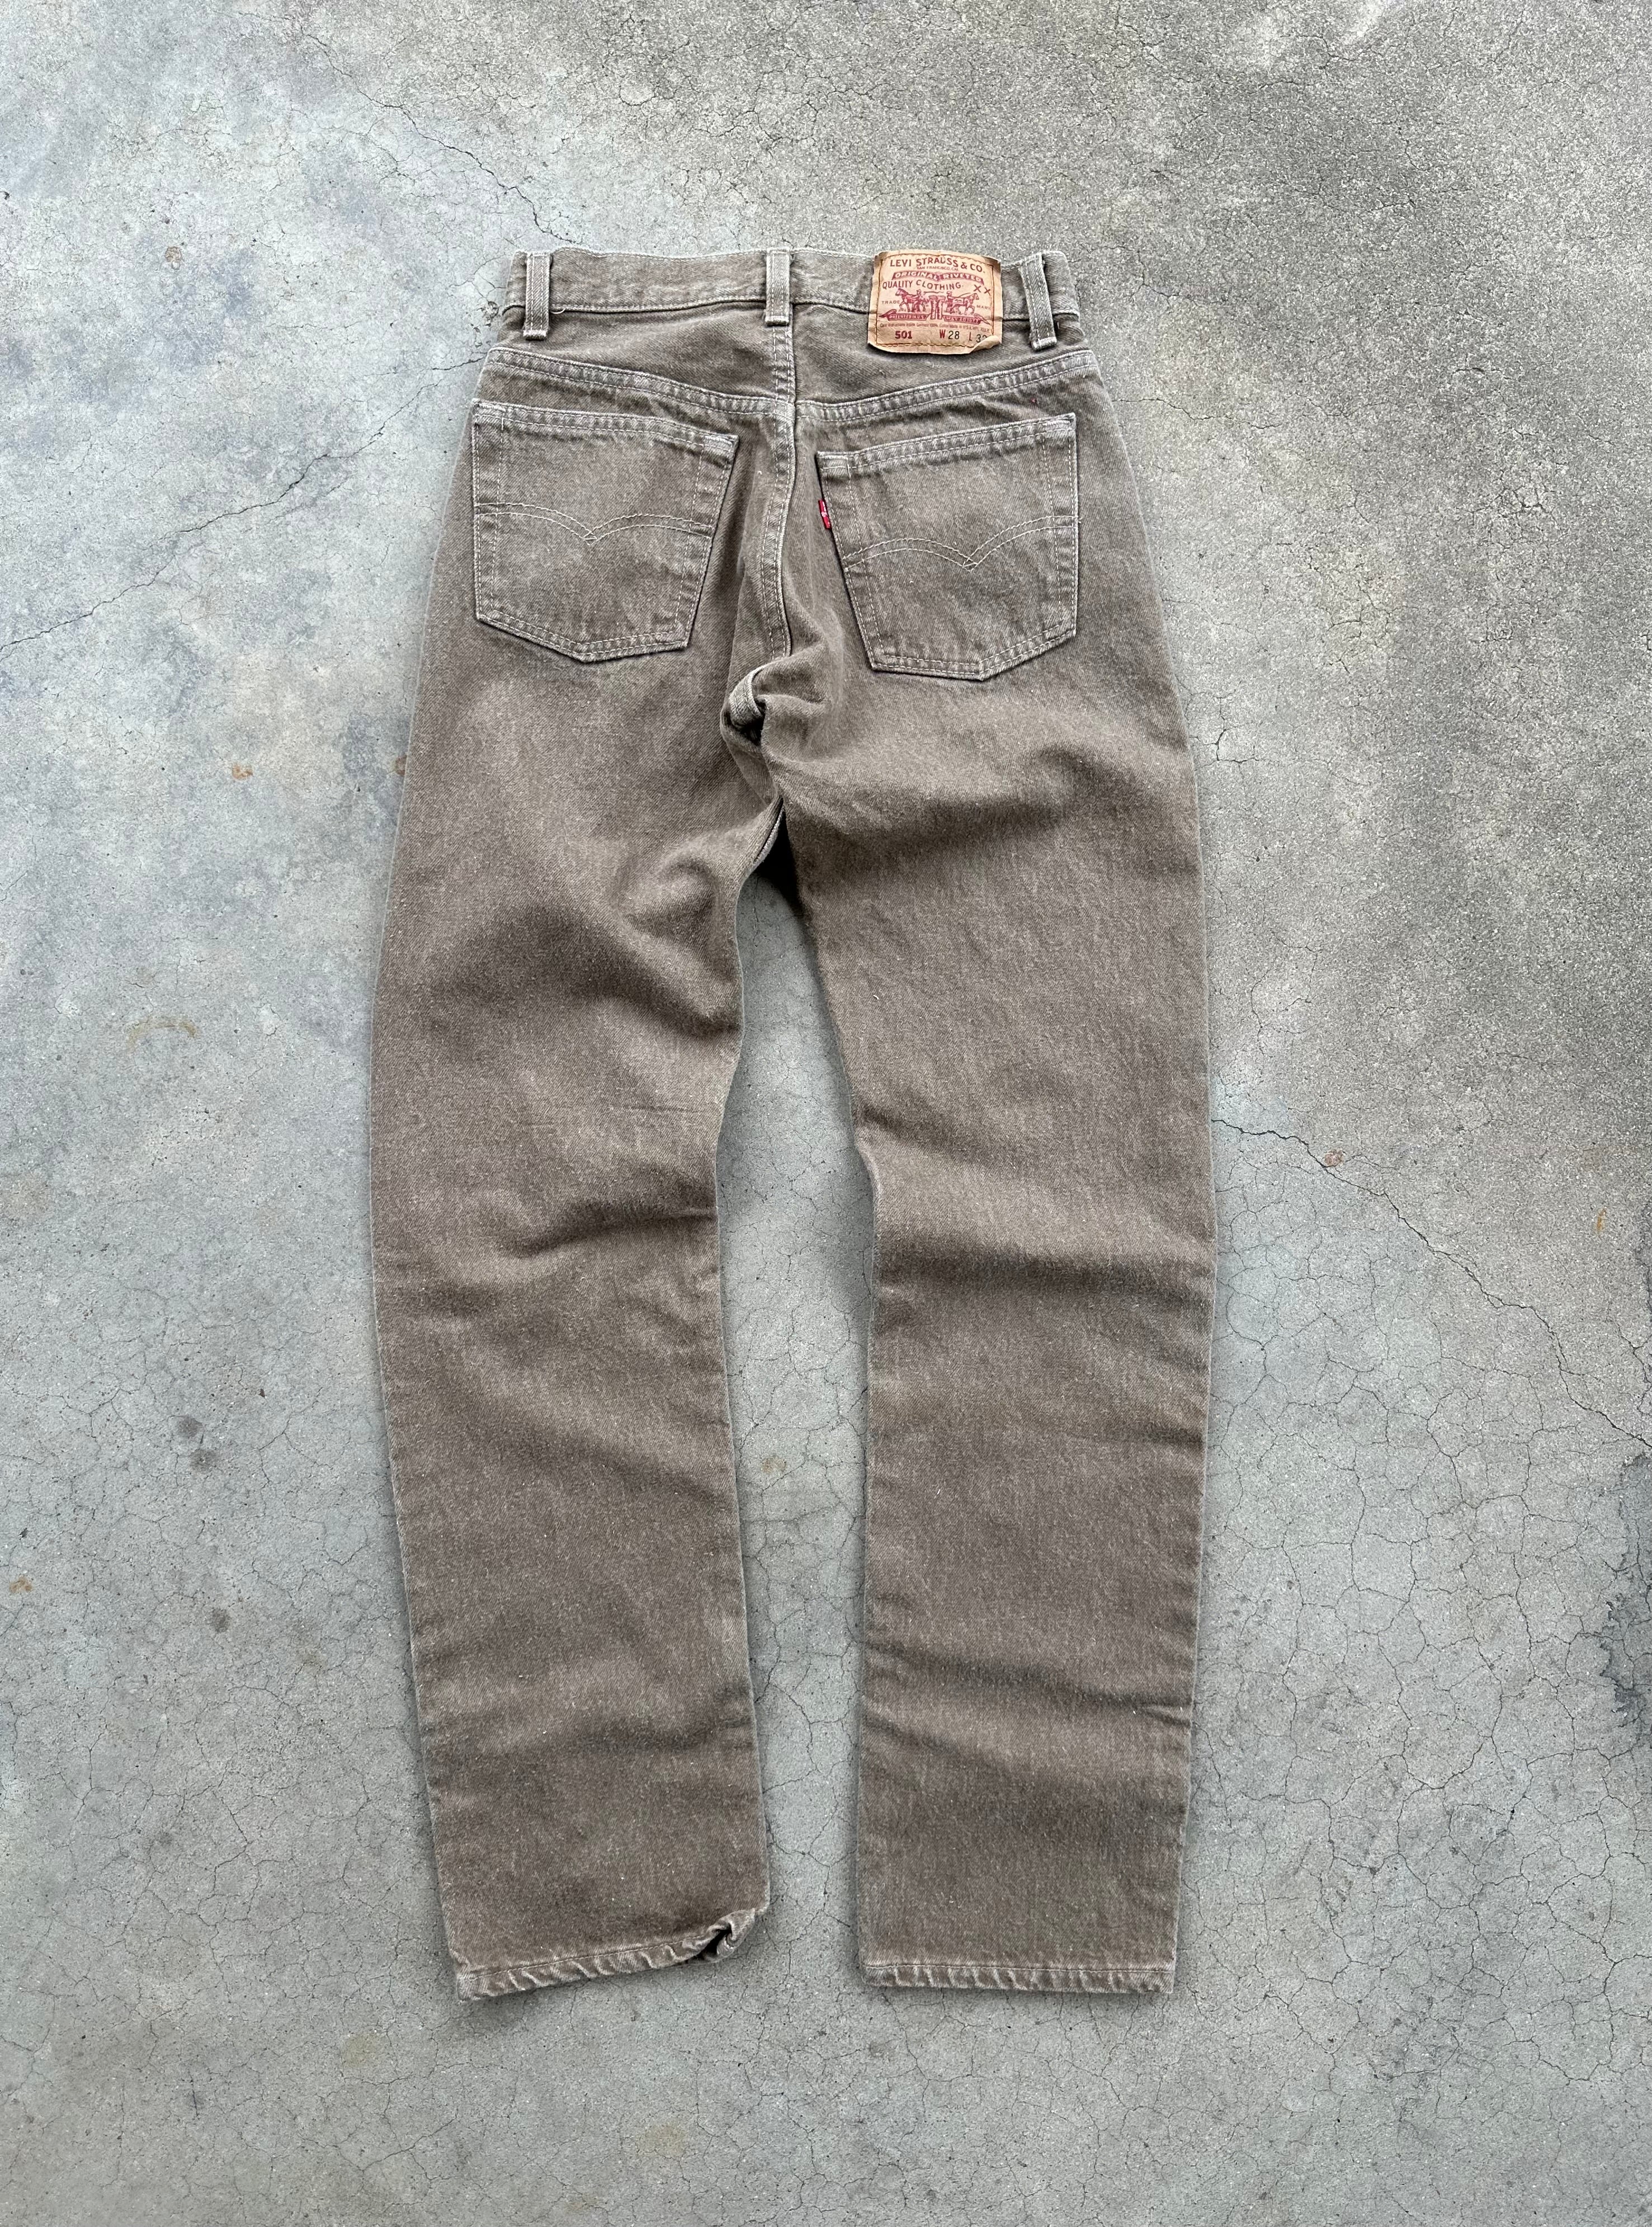 1990s Levi’s 501 Light Brown Jeans (26"x30.5")